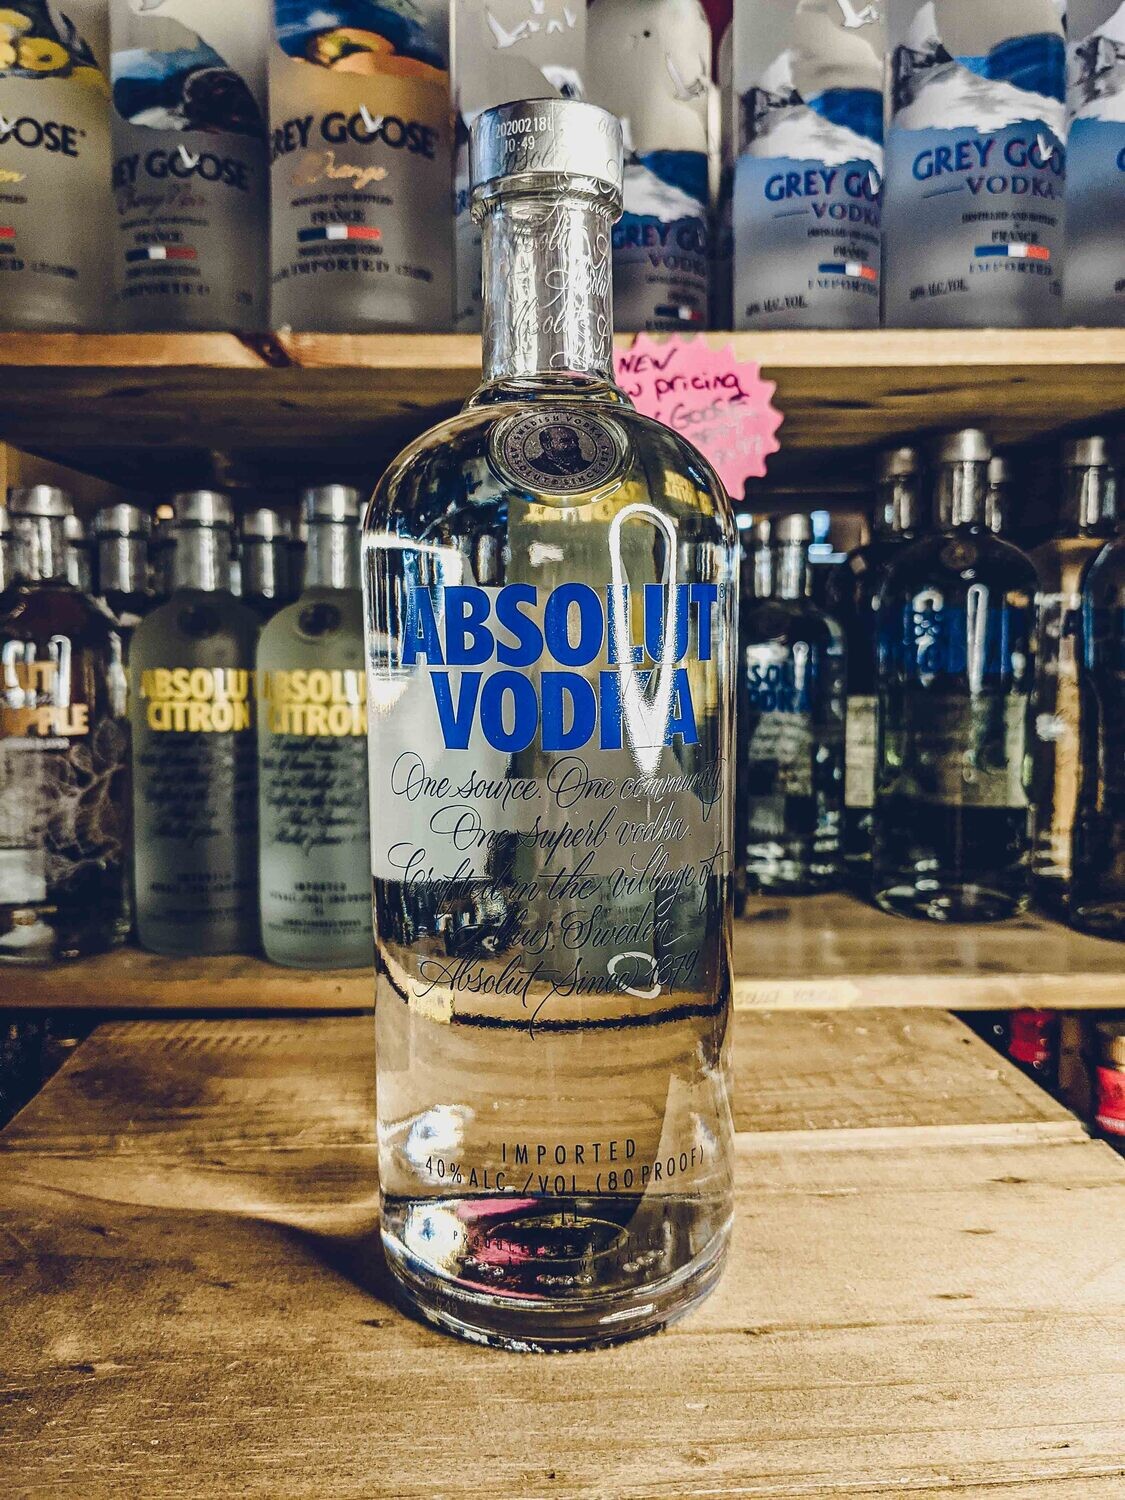 Absolut Vodka 1.0